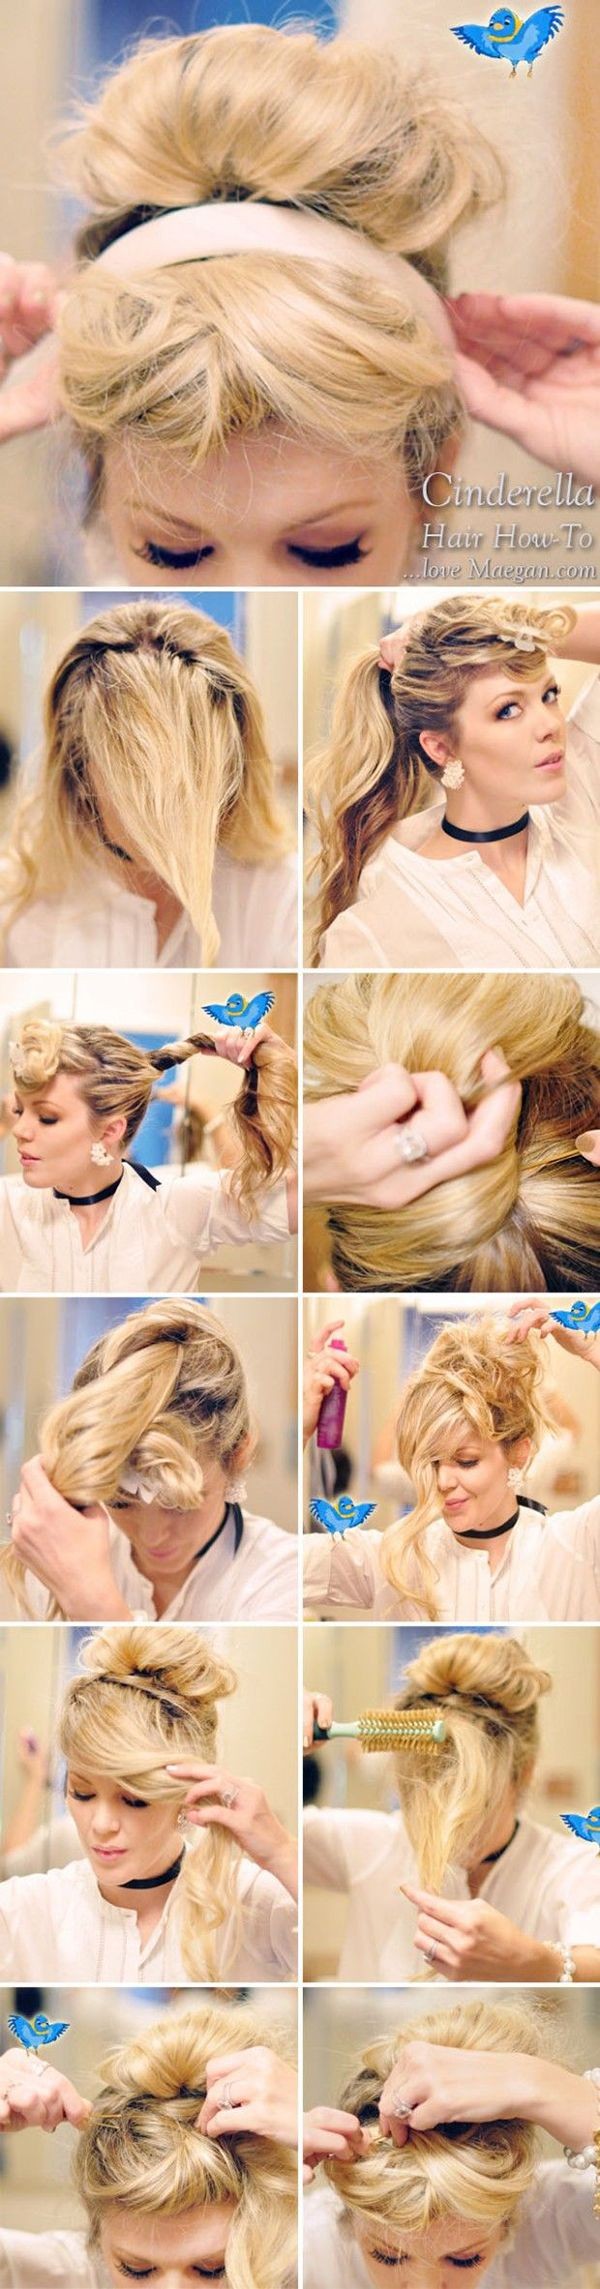 9 peinados inspirados a las princesas disney